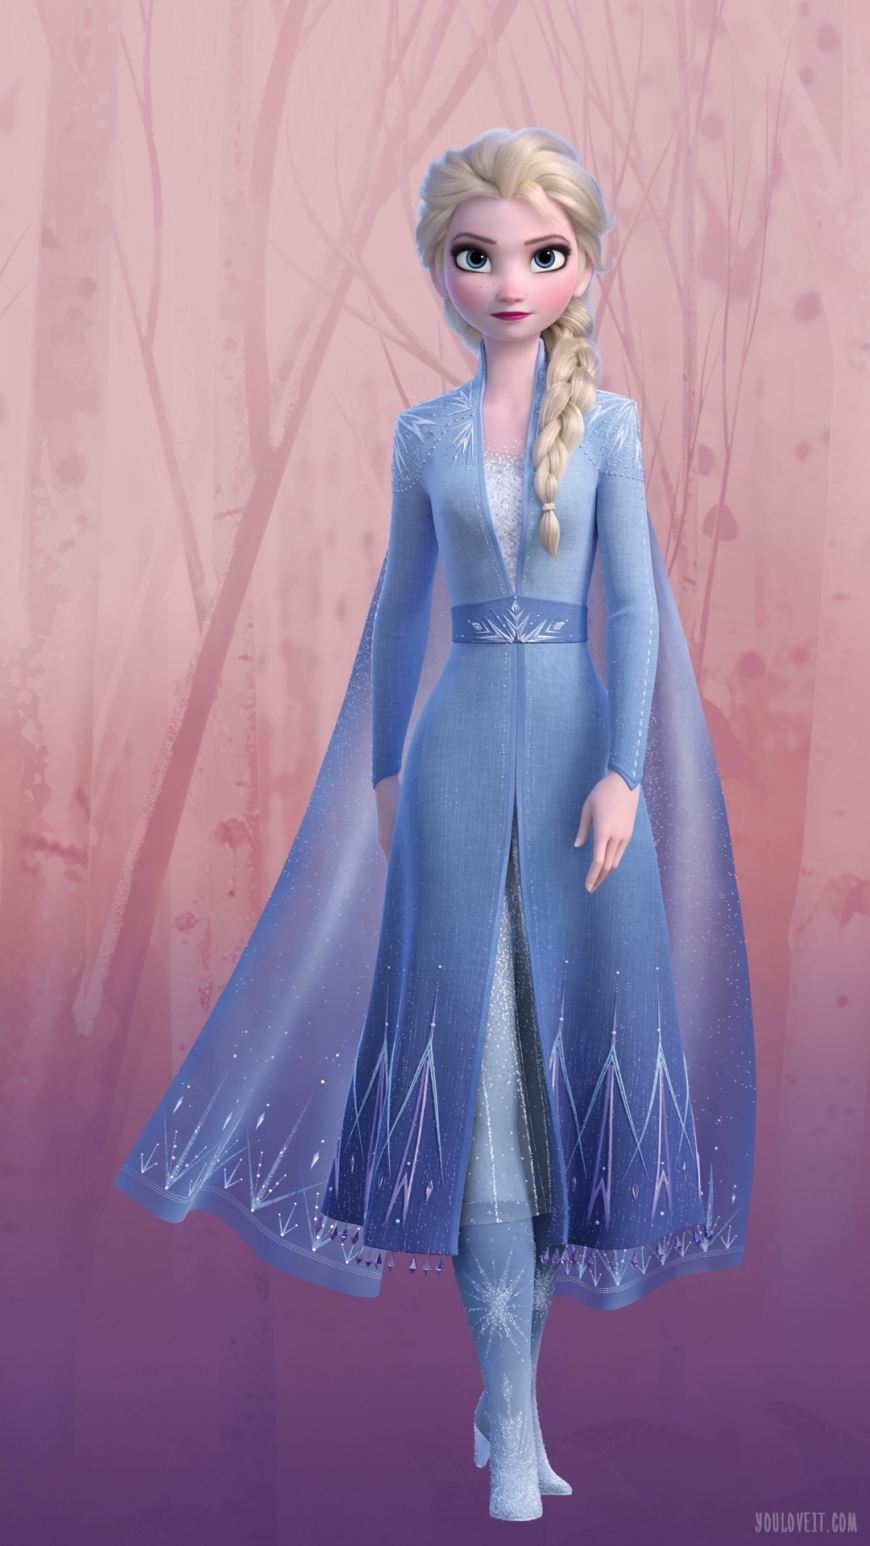 Frozen 2 Elsa phone wallpaper